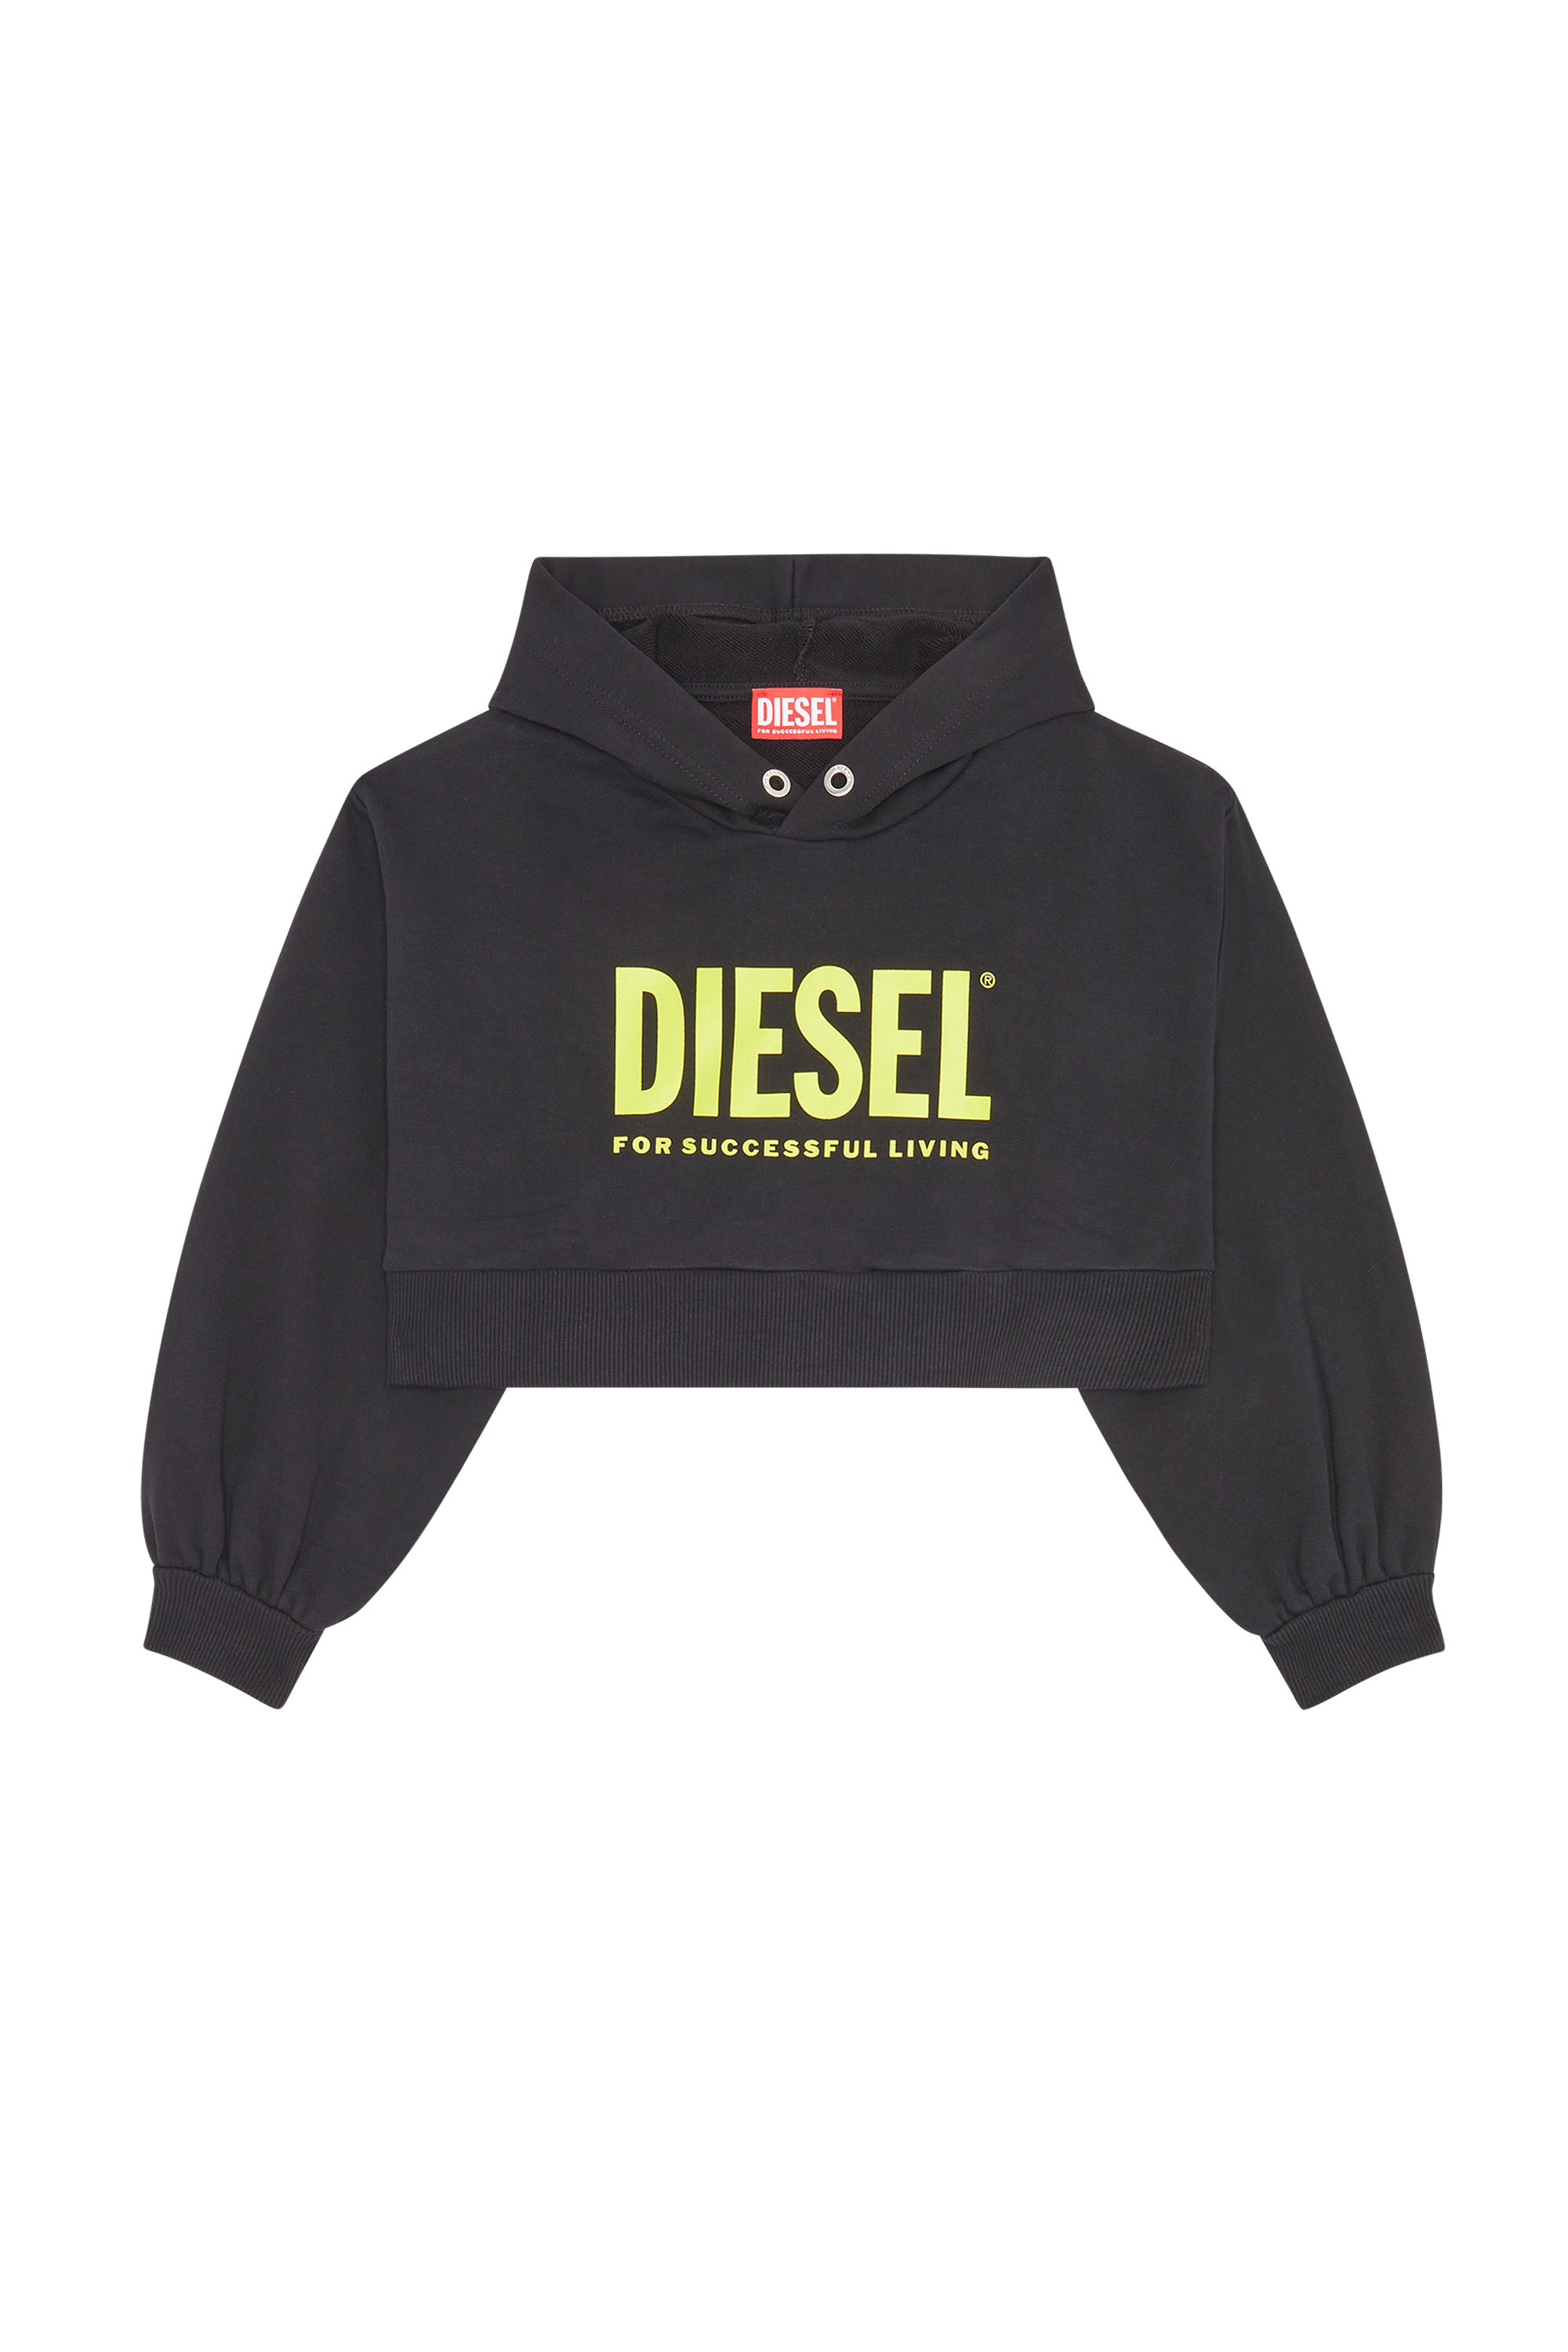 Diesel - SKRALOGO, Noir/Jaune - Image 1